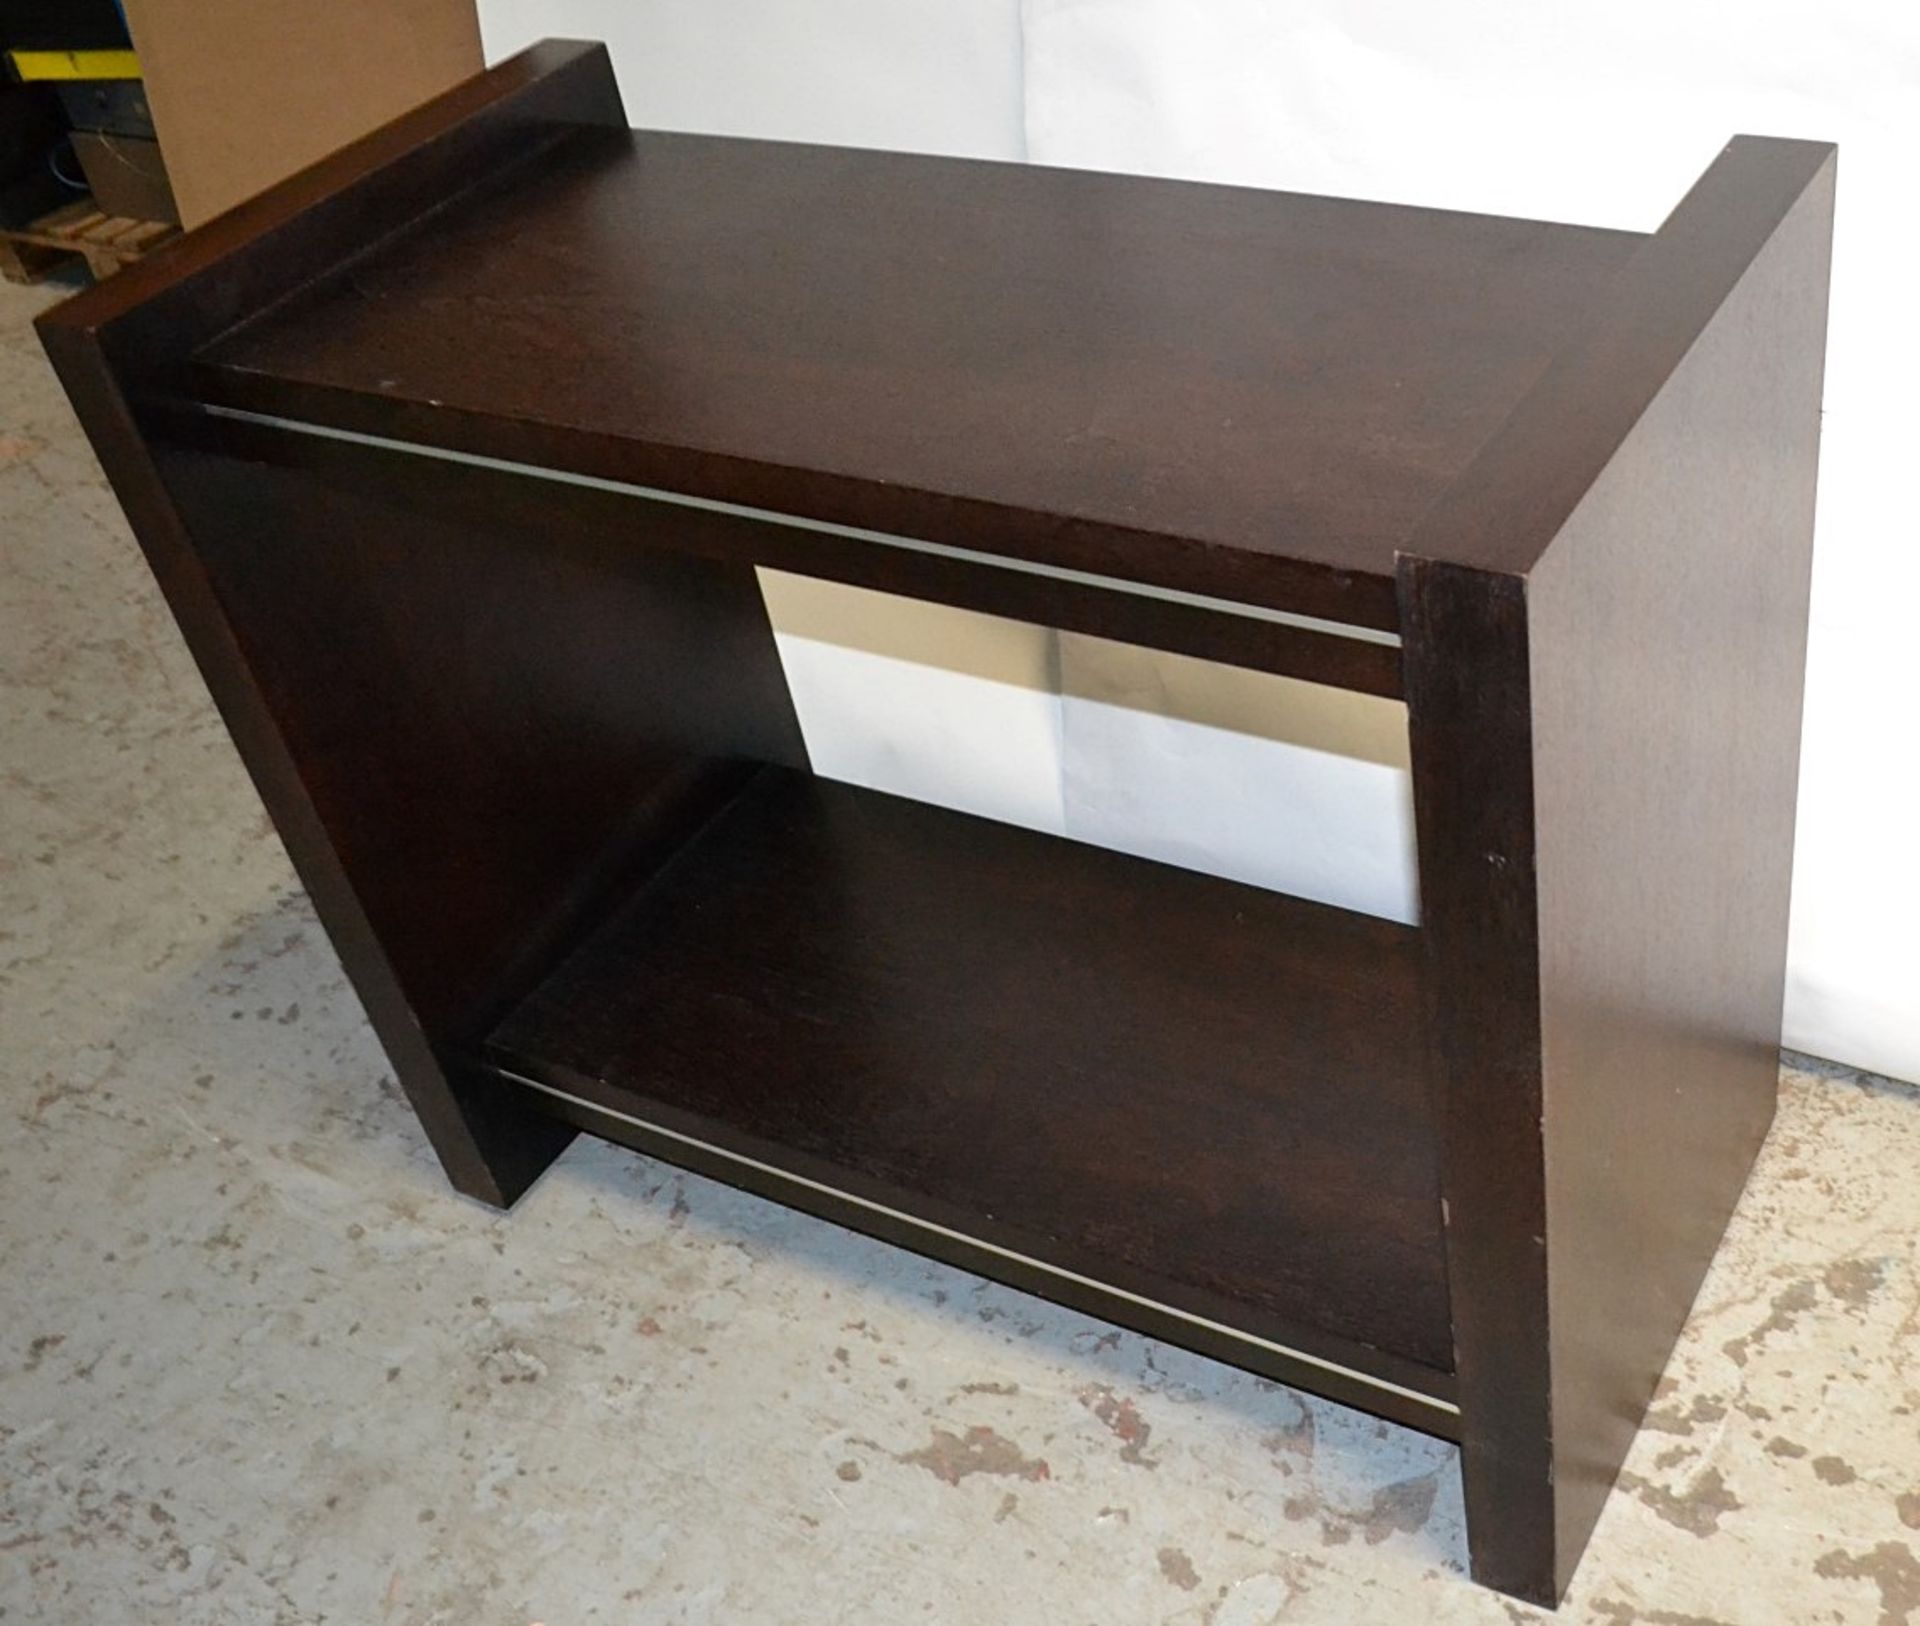 1 x Solid Wood Bookcase - Dimensions: W103 x H85 x D50cm - CL052 - Location: Altrincham WA14 **NO VA - Image 2 of 5